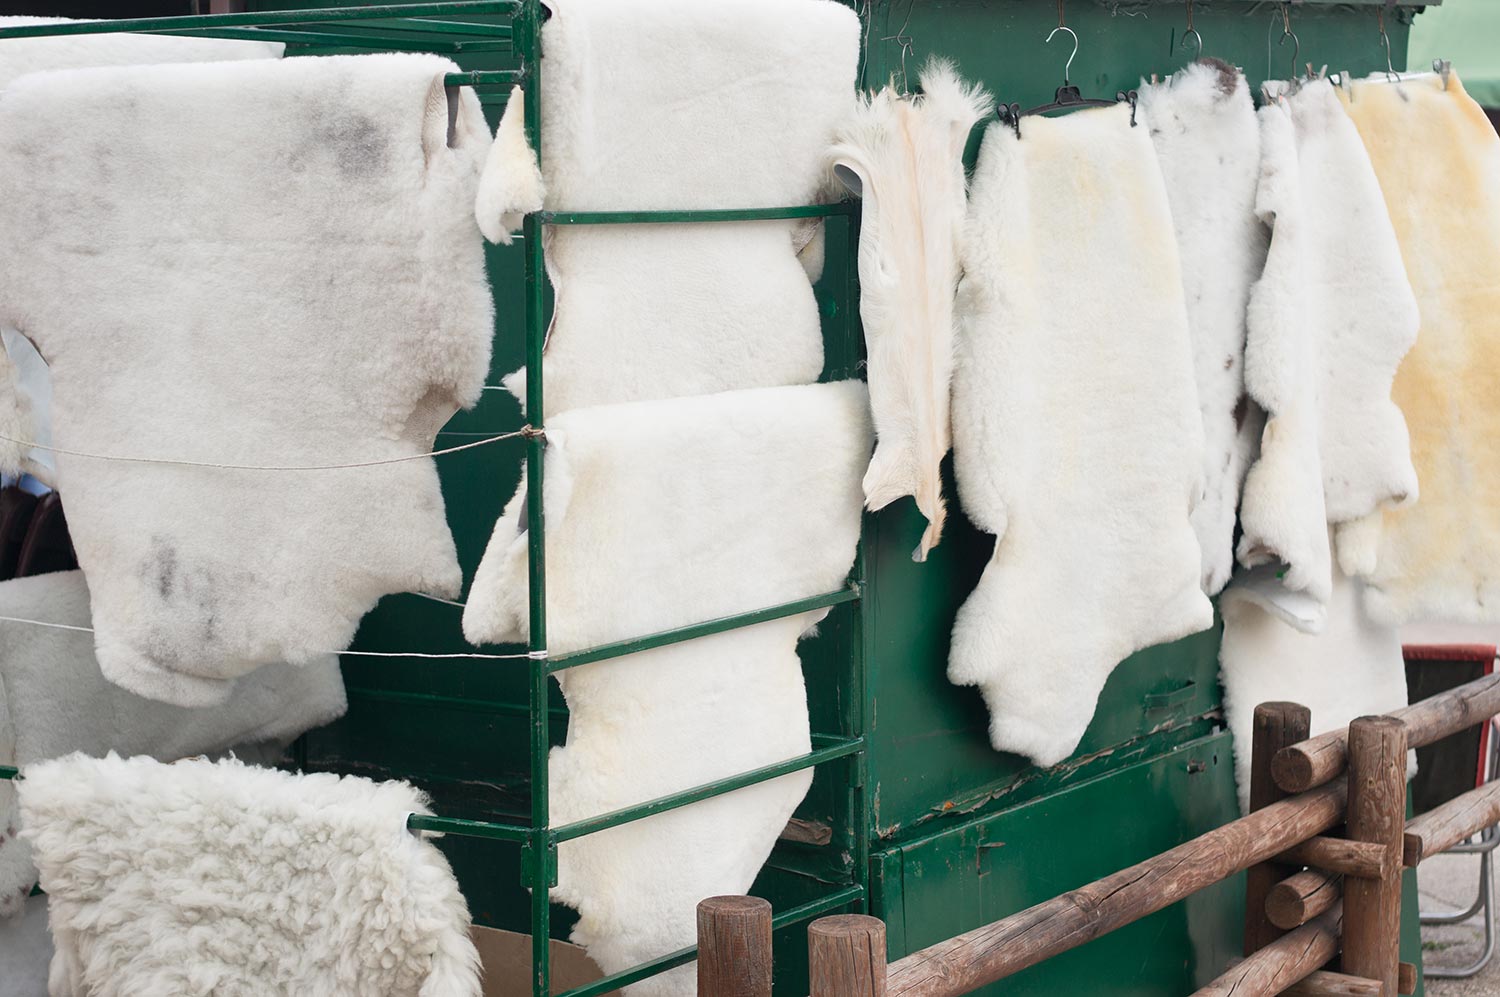 Drying of animal fur after skinning